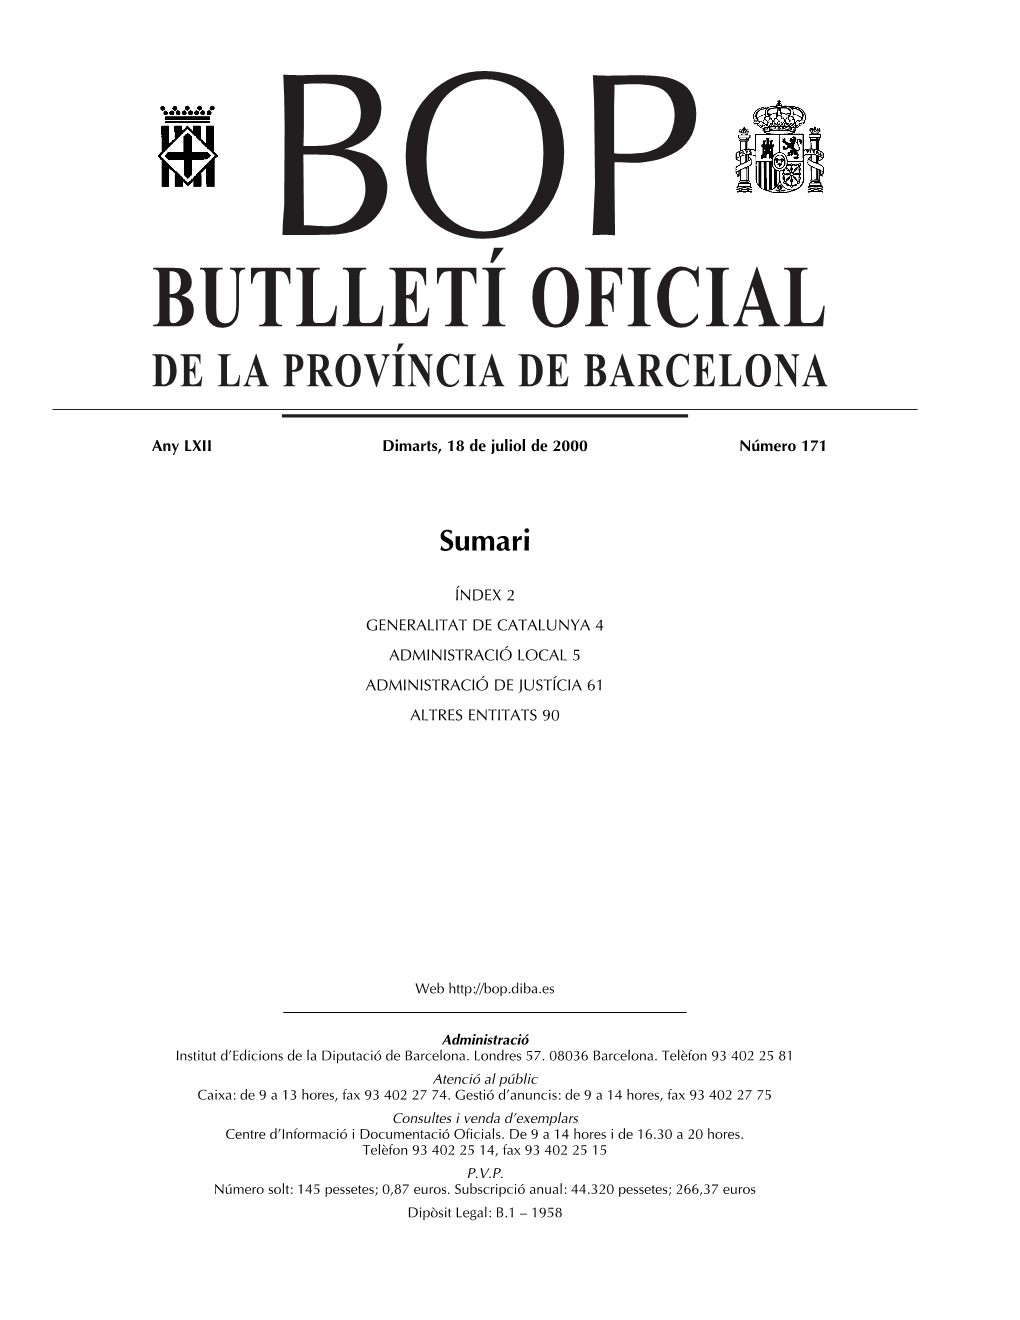 Butlletí Oficial De La Província De Barcelona 18¢ / 7 / 2000